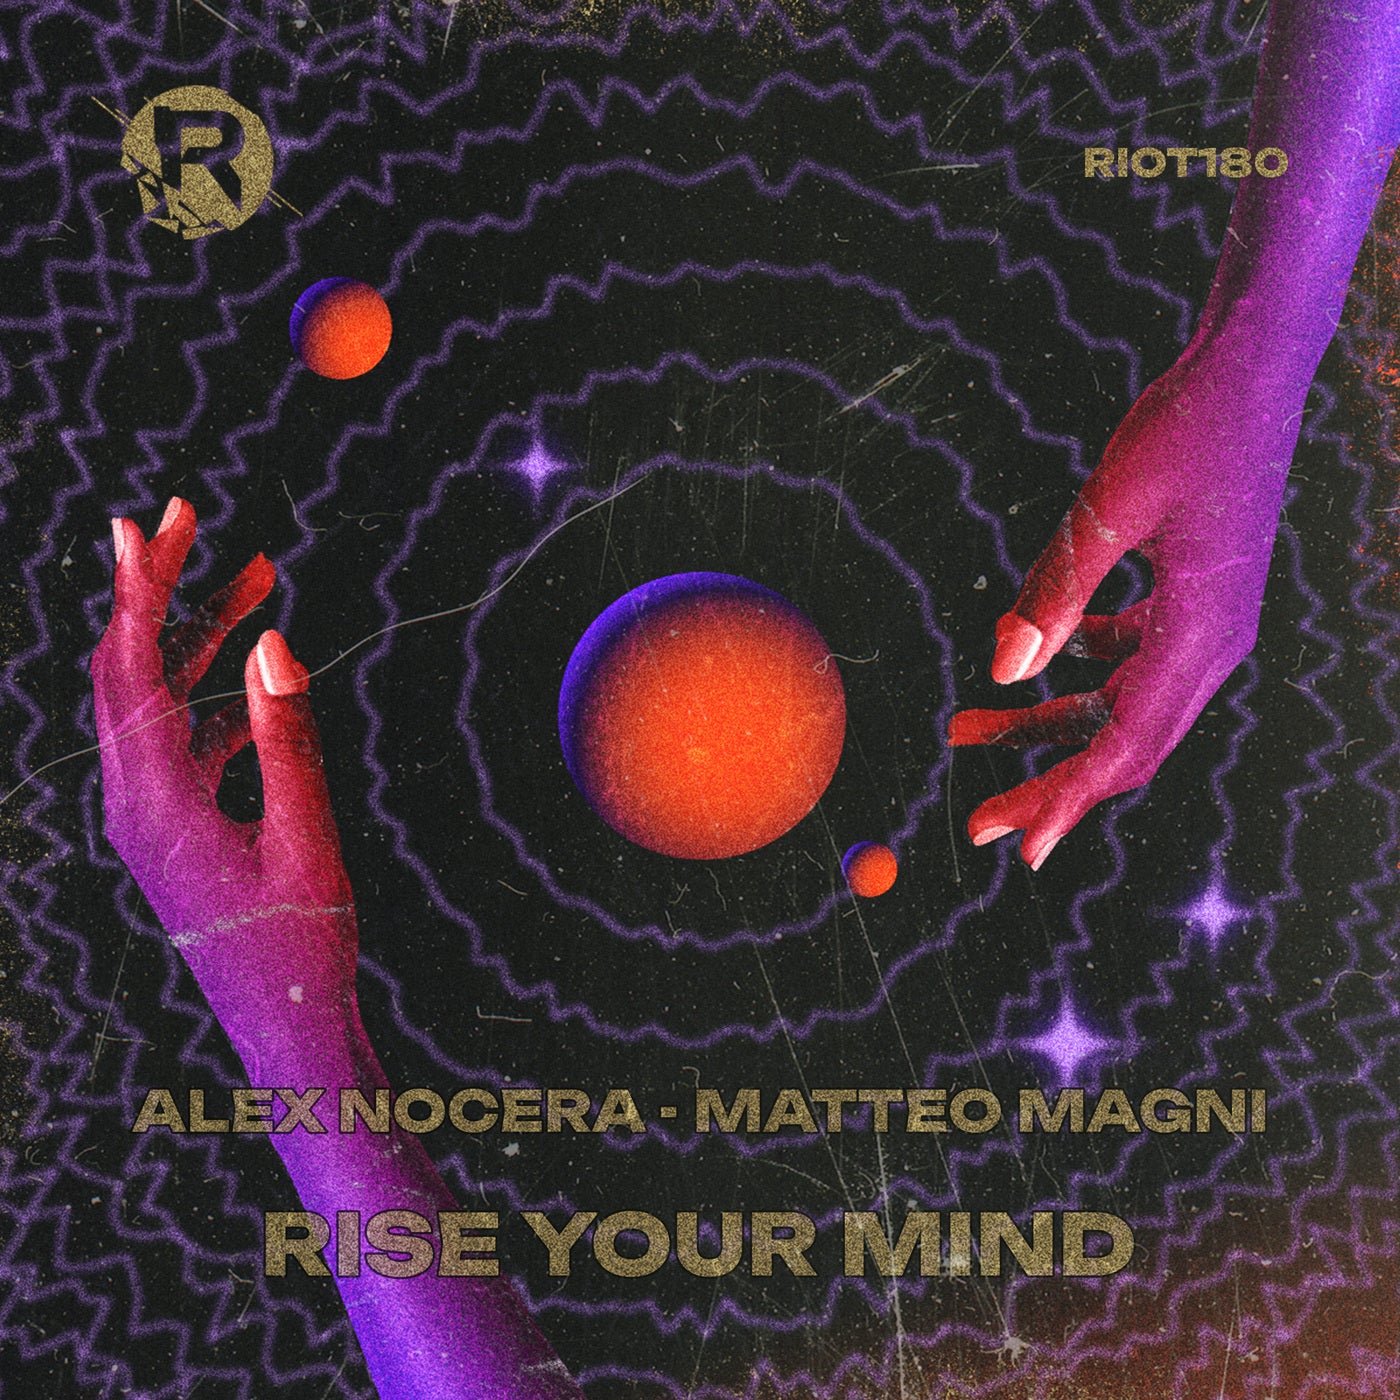 image cover: Alex Nocera, Matteo Magni - Rise Your Mind on Riot Recordings